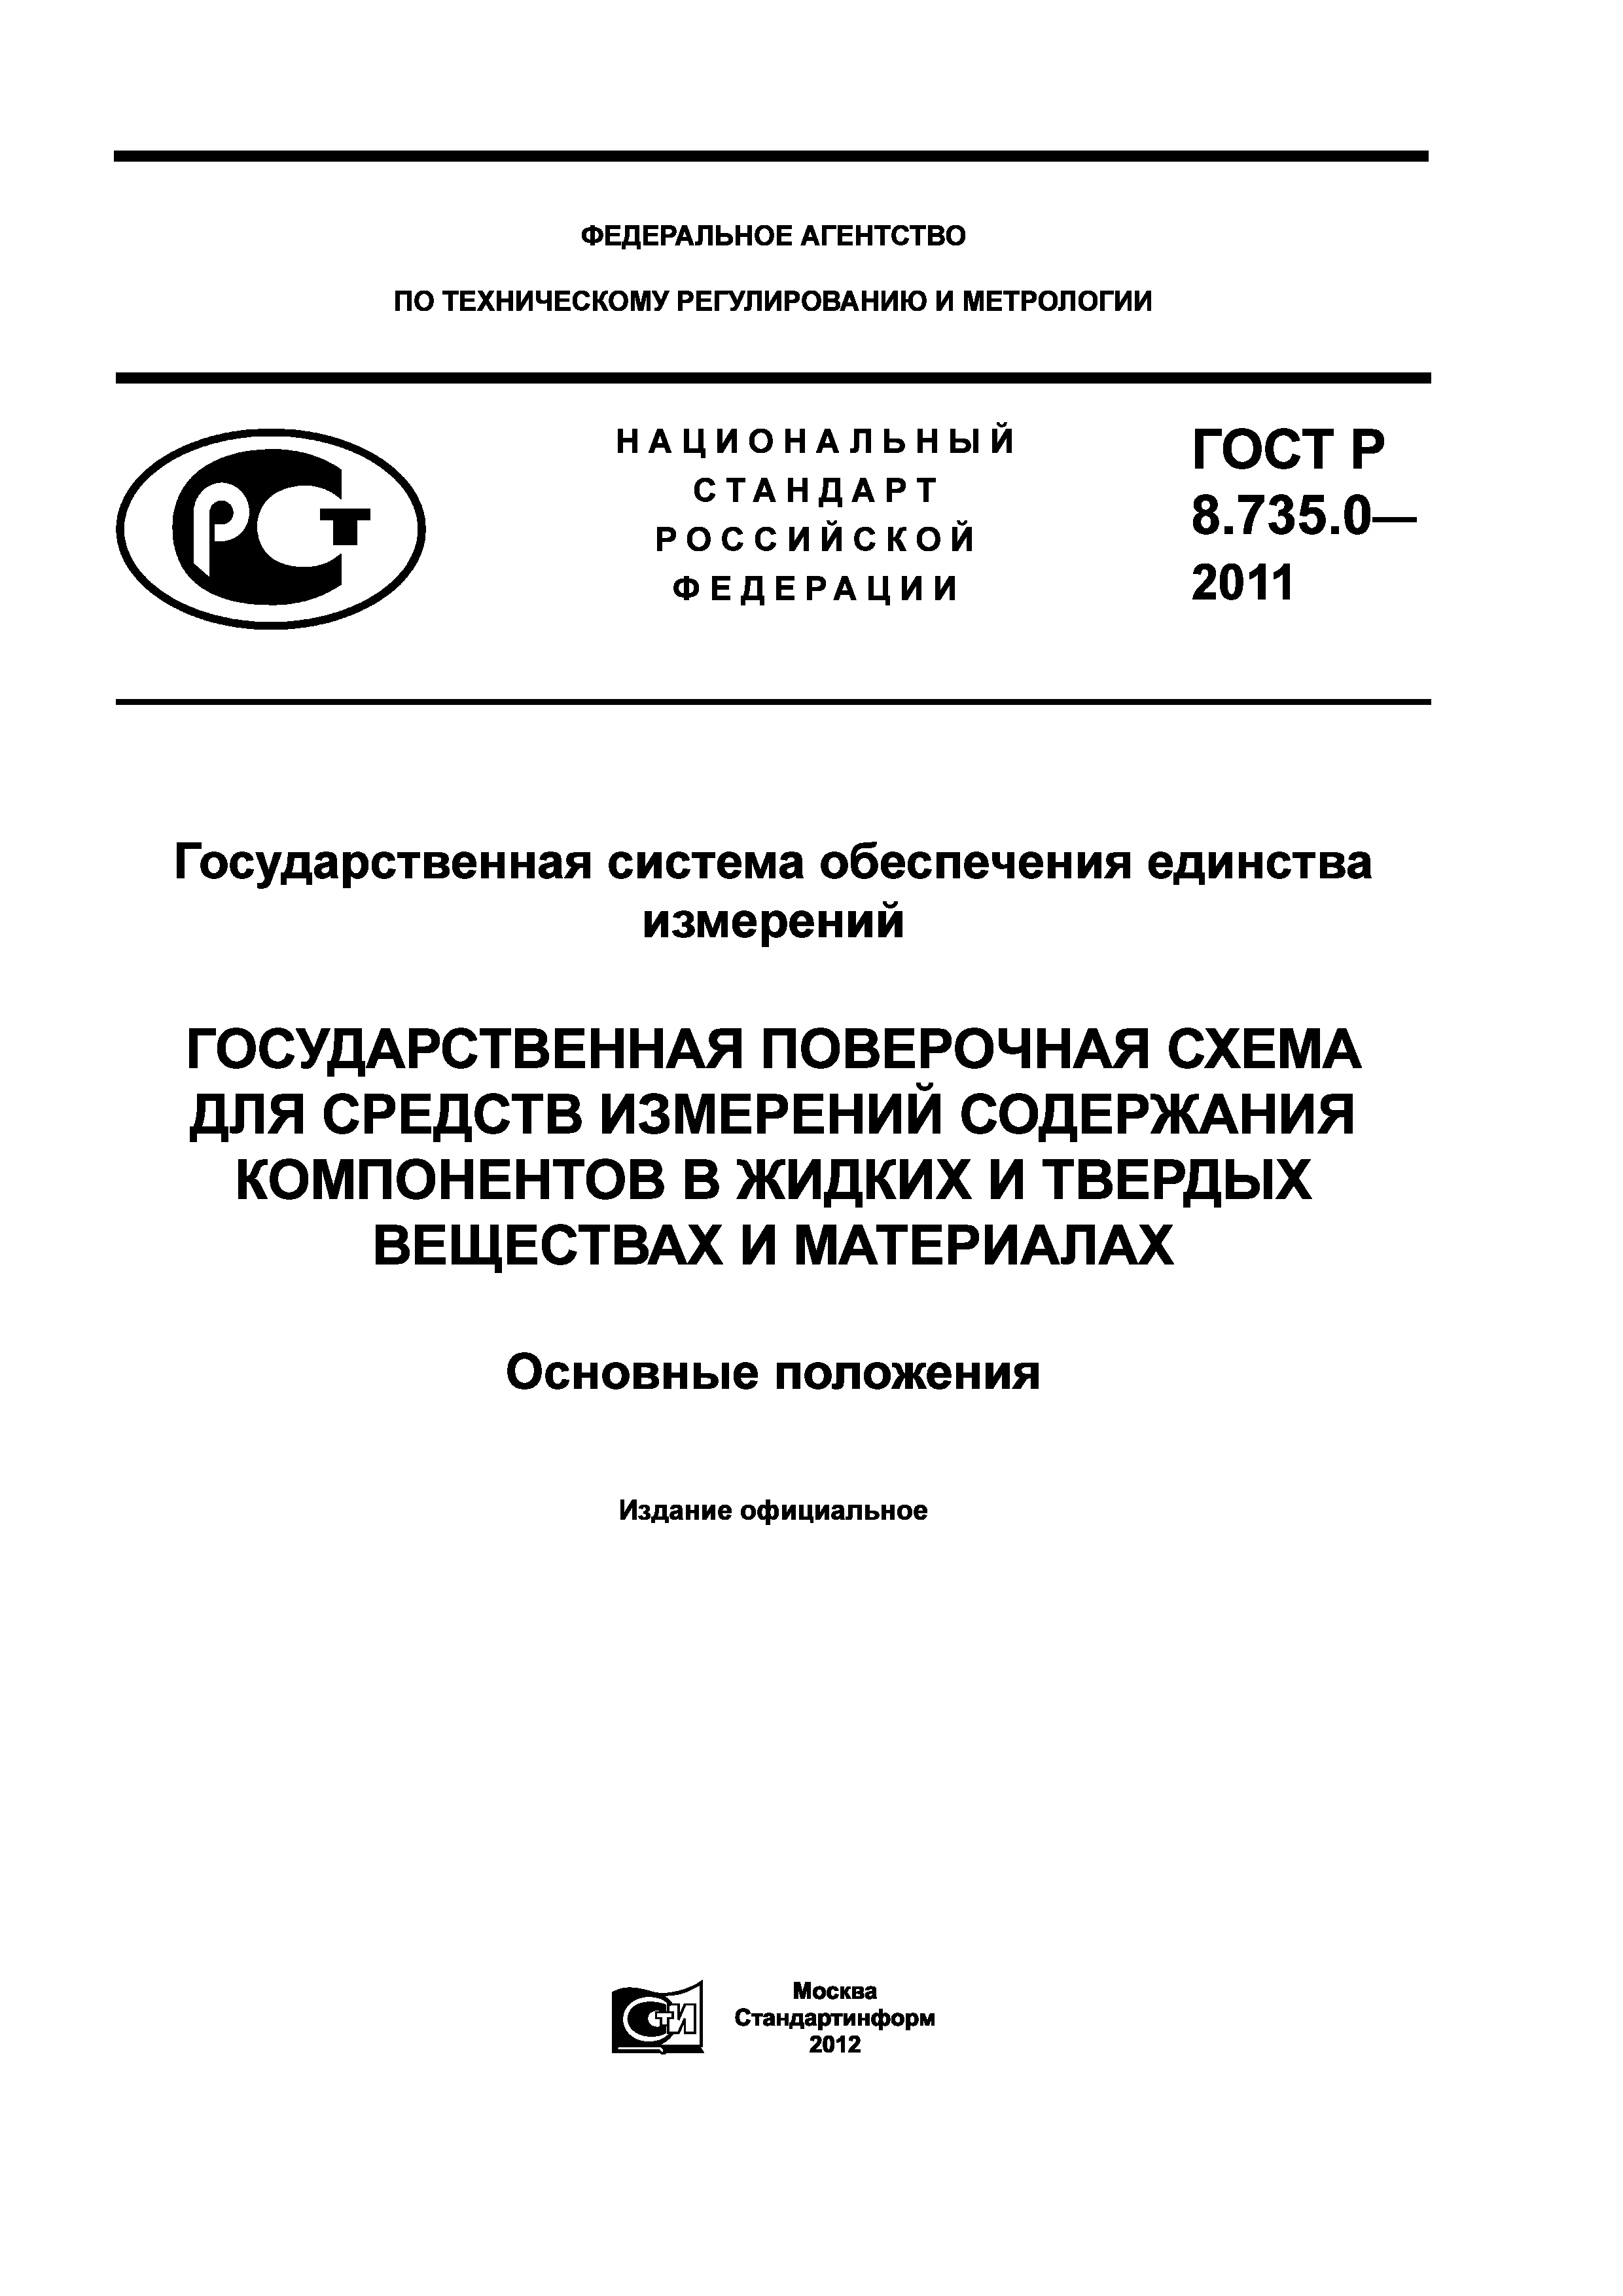 ГОСТ Р 8.735.0-2011